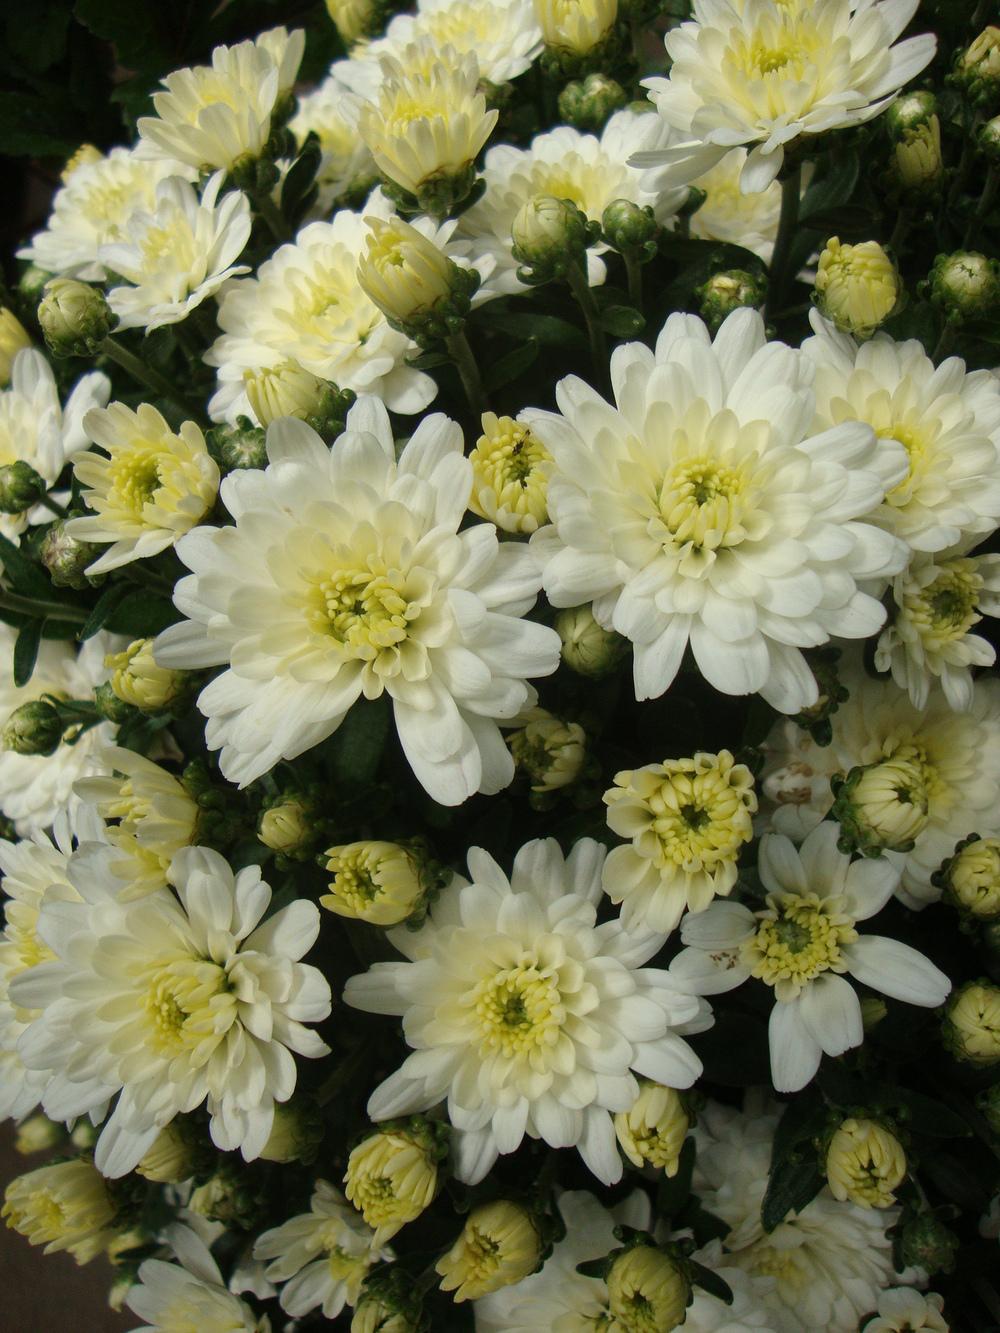 Photo of Chrysanthemum uploaded by Paul2032